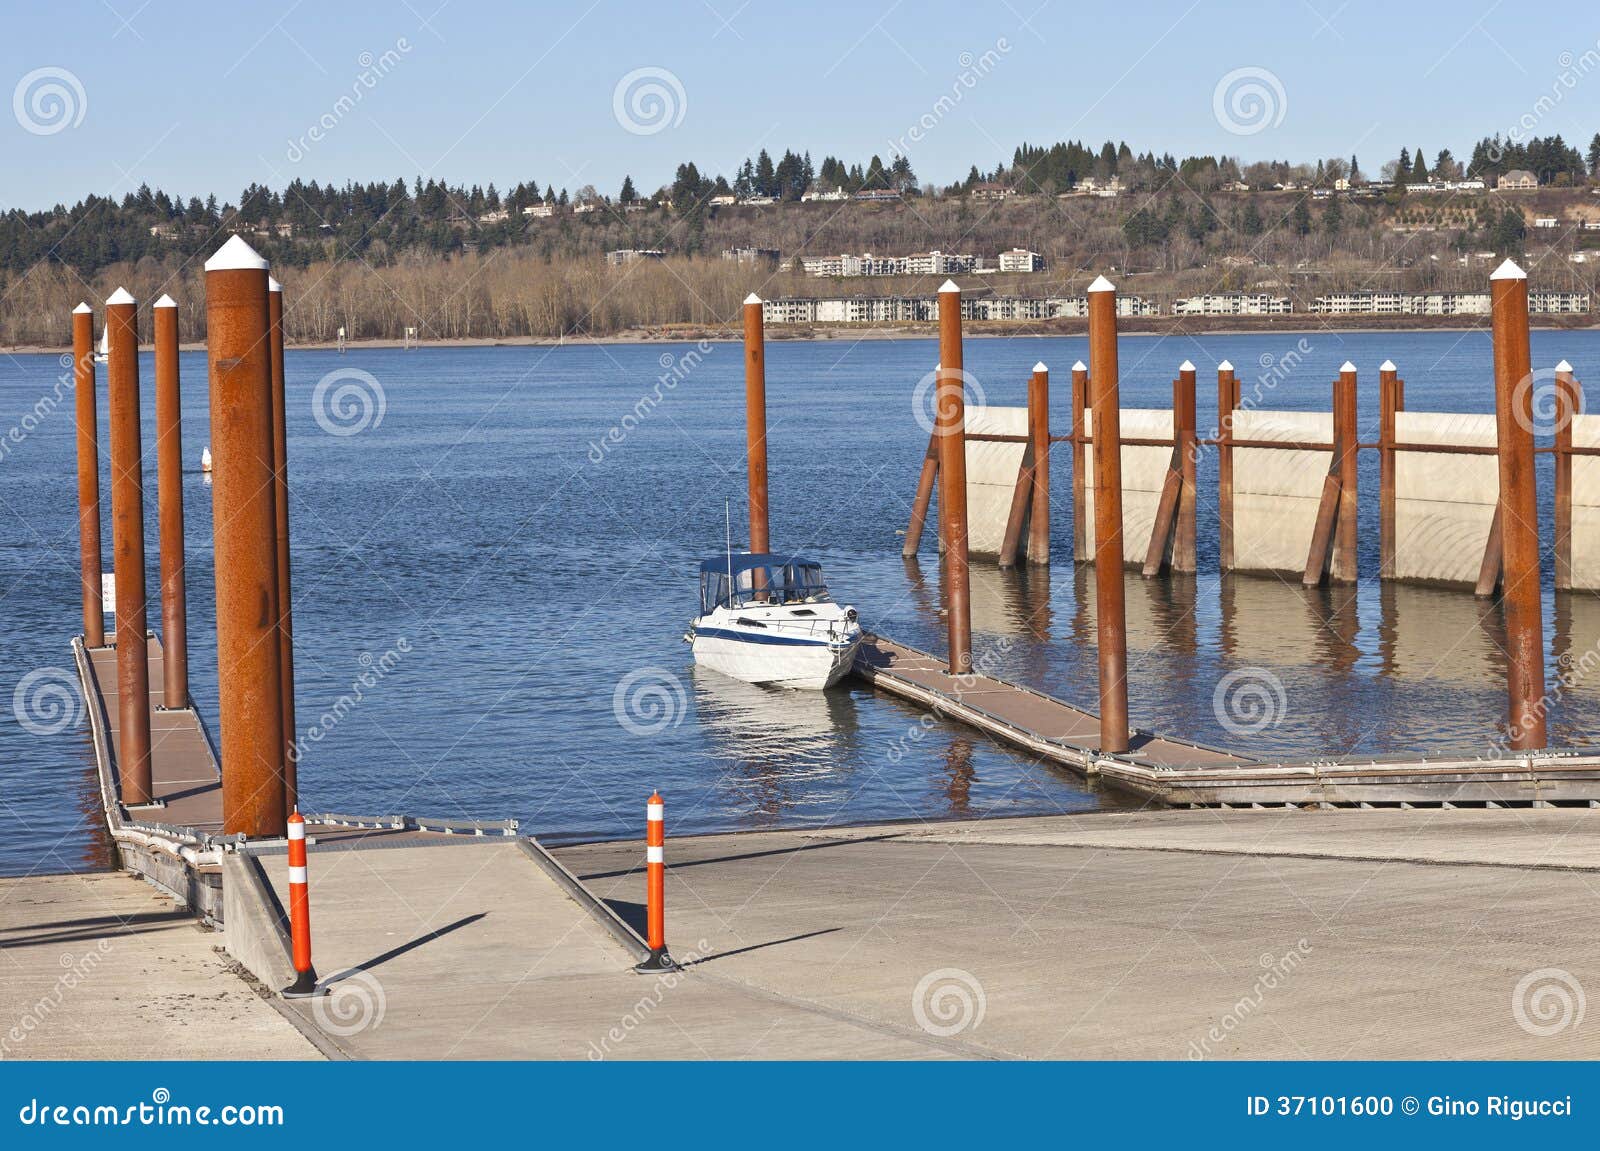 https://thumbs.dreamstime.com/z/boat-launch-pads-steel-poles-oregon-state-parks-wooden-platforms-beams-37101600.jpg